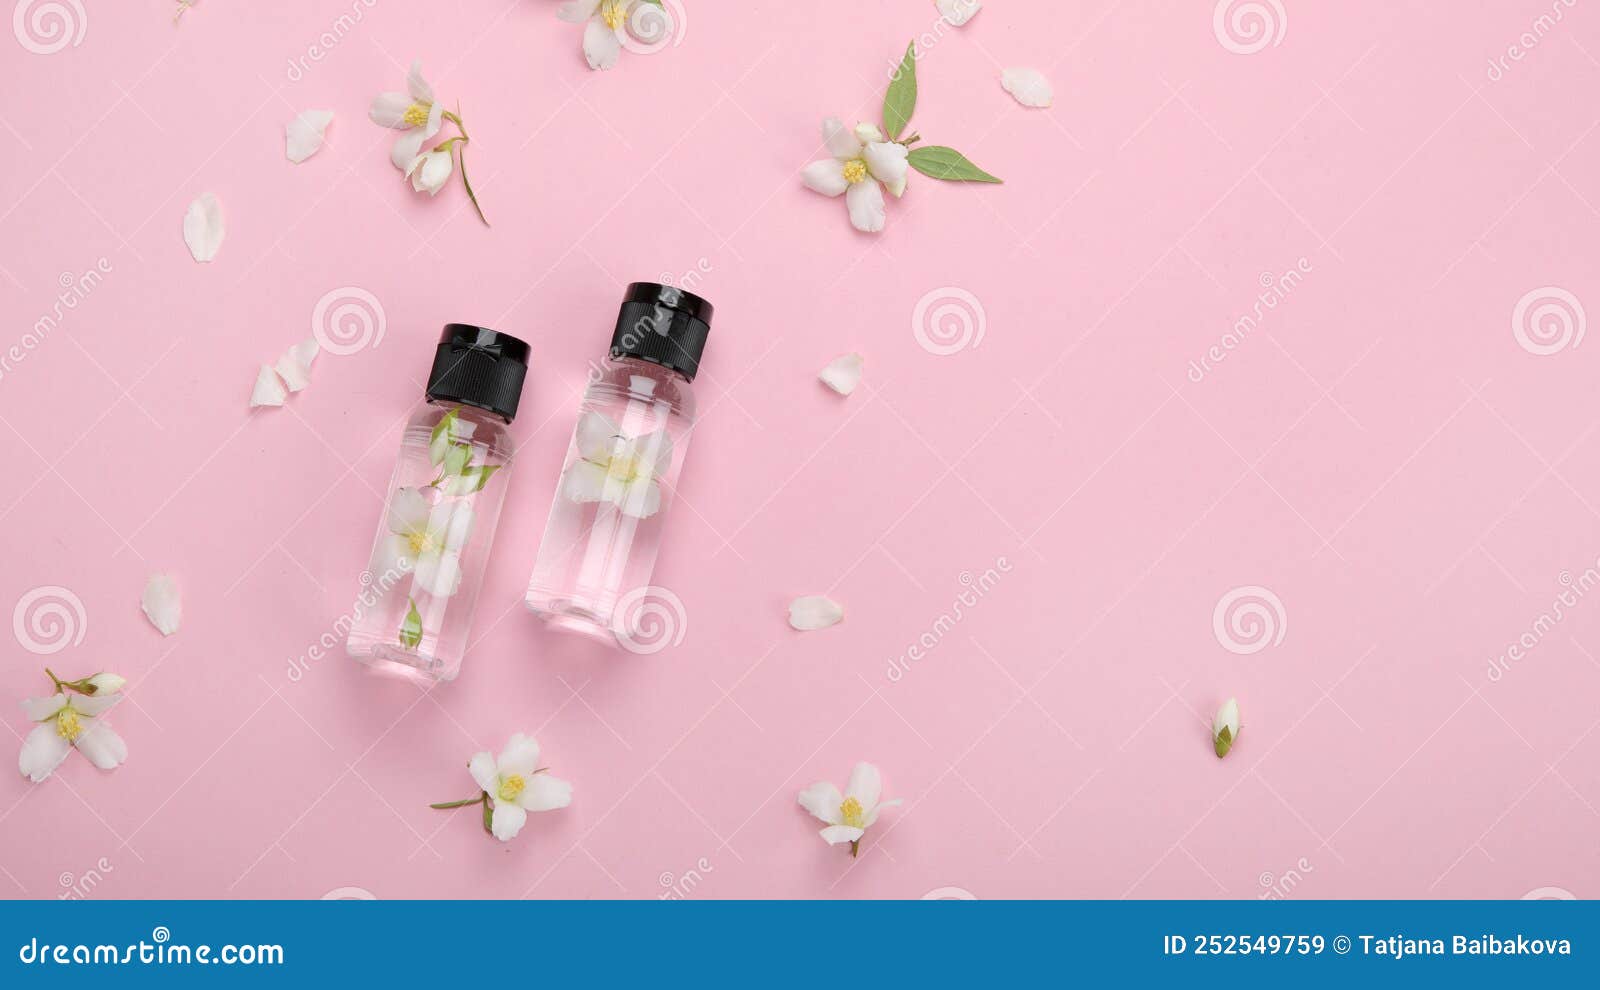 bottles of essential oil with jasmine flowers